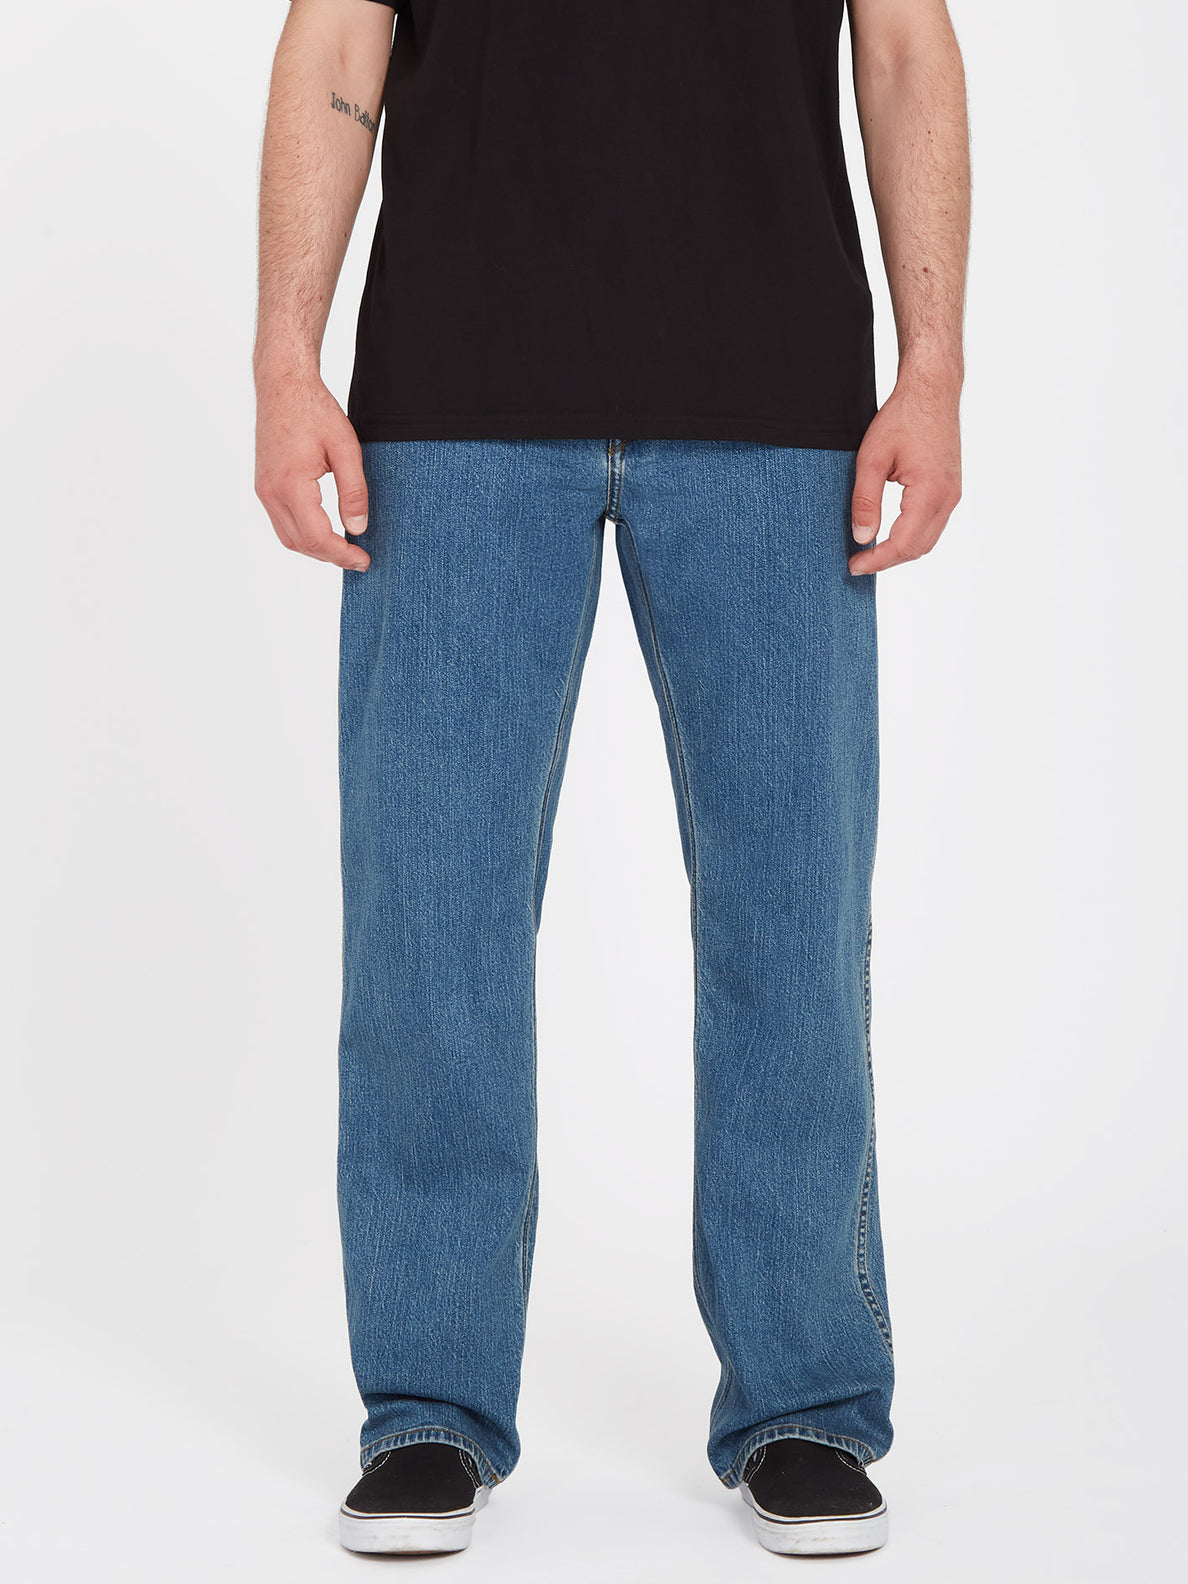 Modown Jeans - AGED INDIGO (A1931900_AIN) [F]